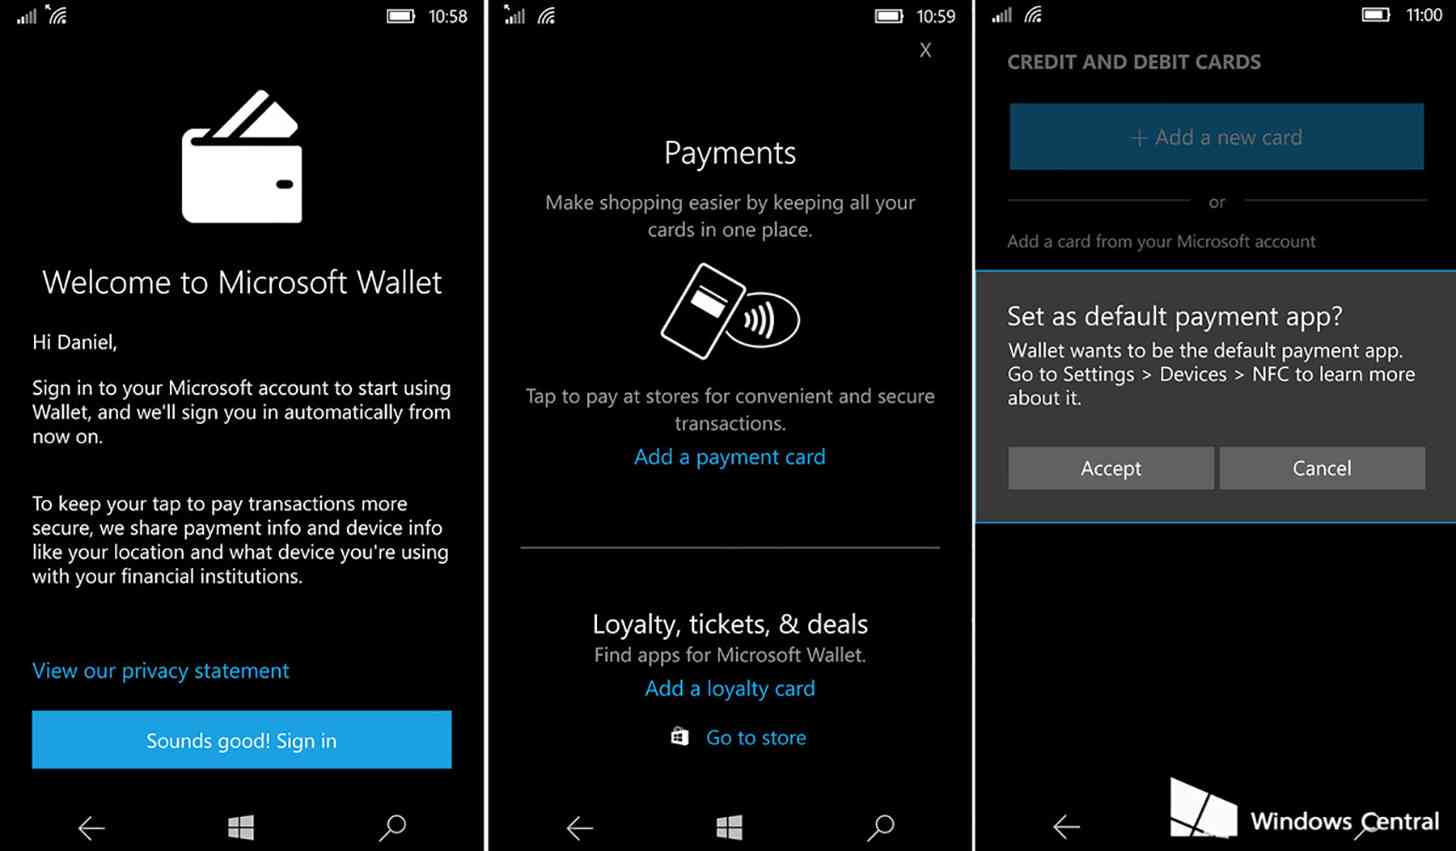 Windows 10 Mobile Wallet 2.0 app update